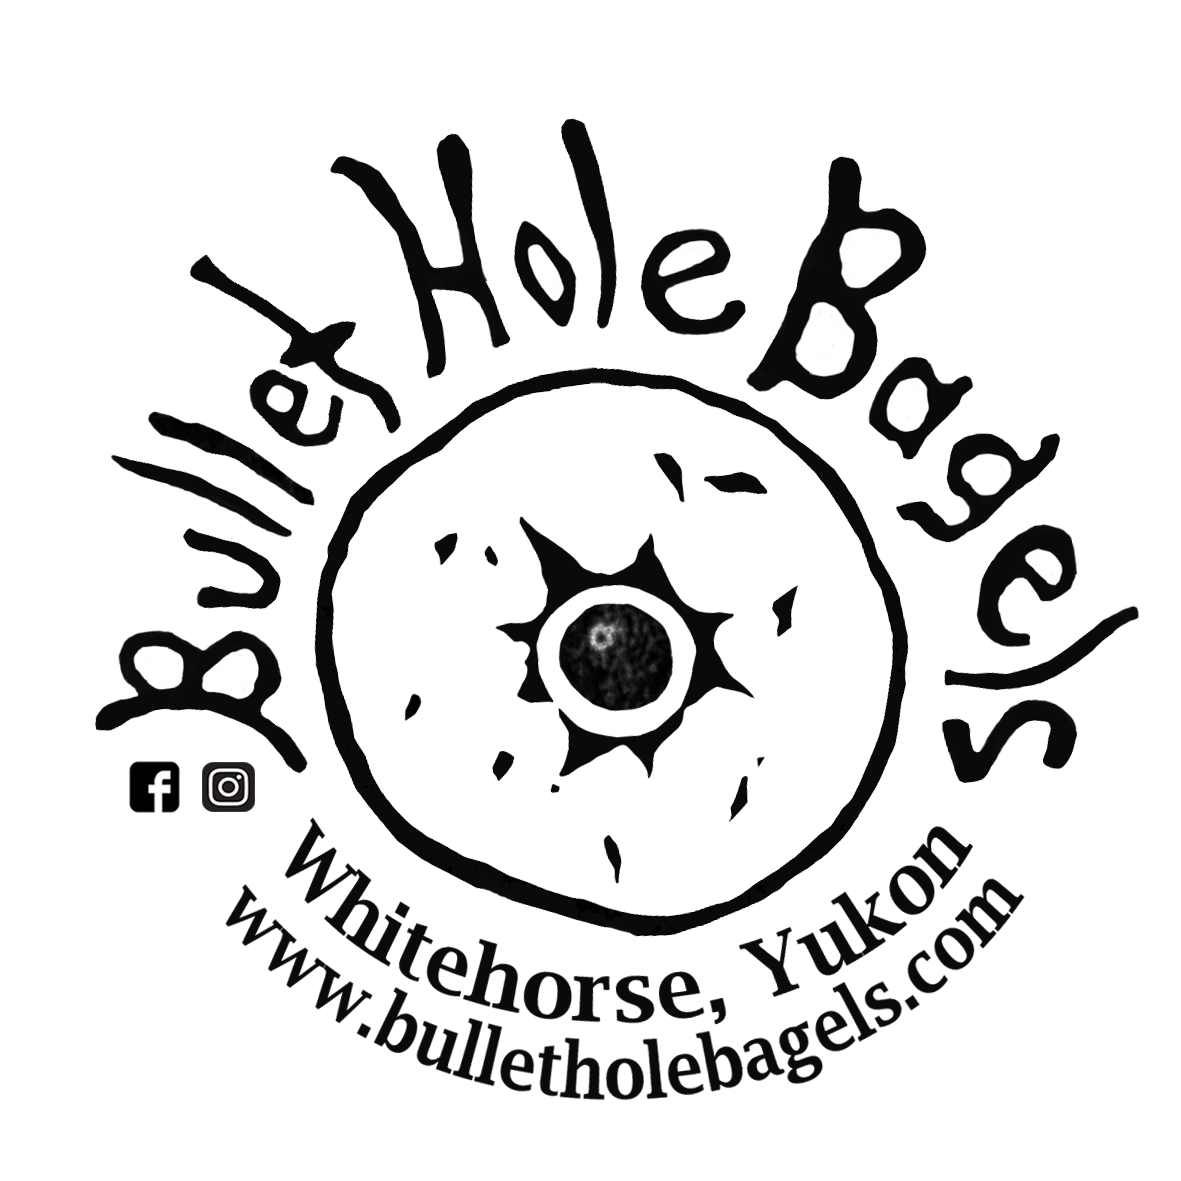 Bullet Hole Bagels